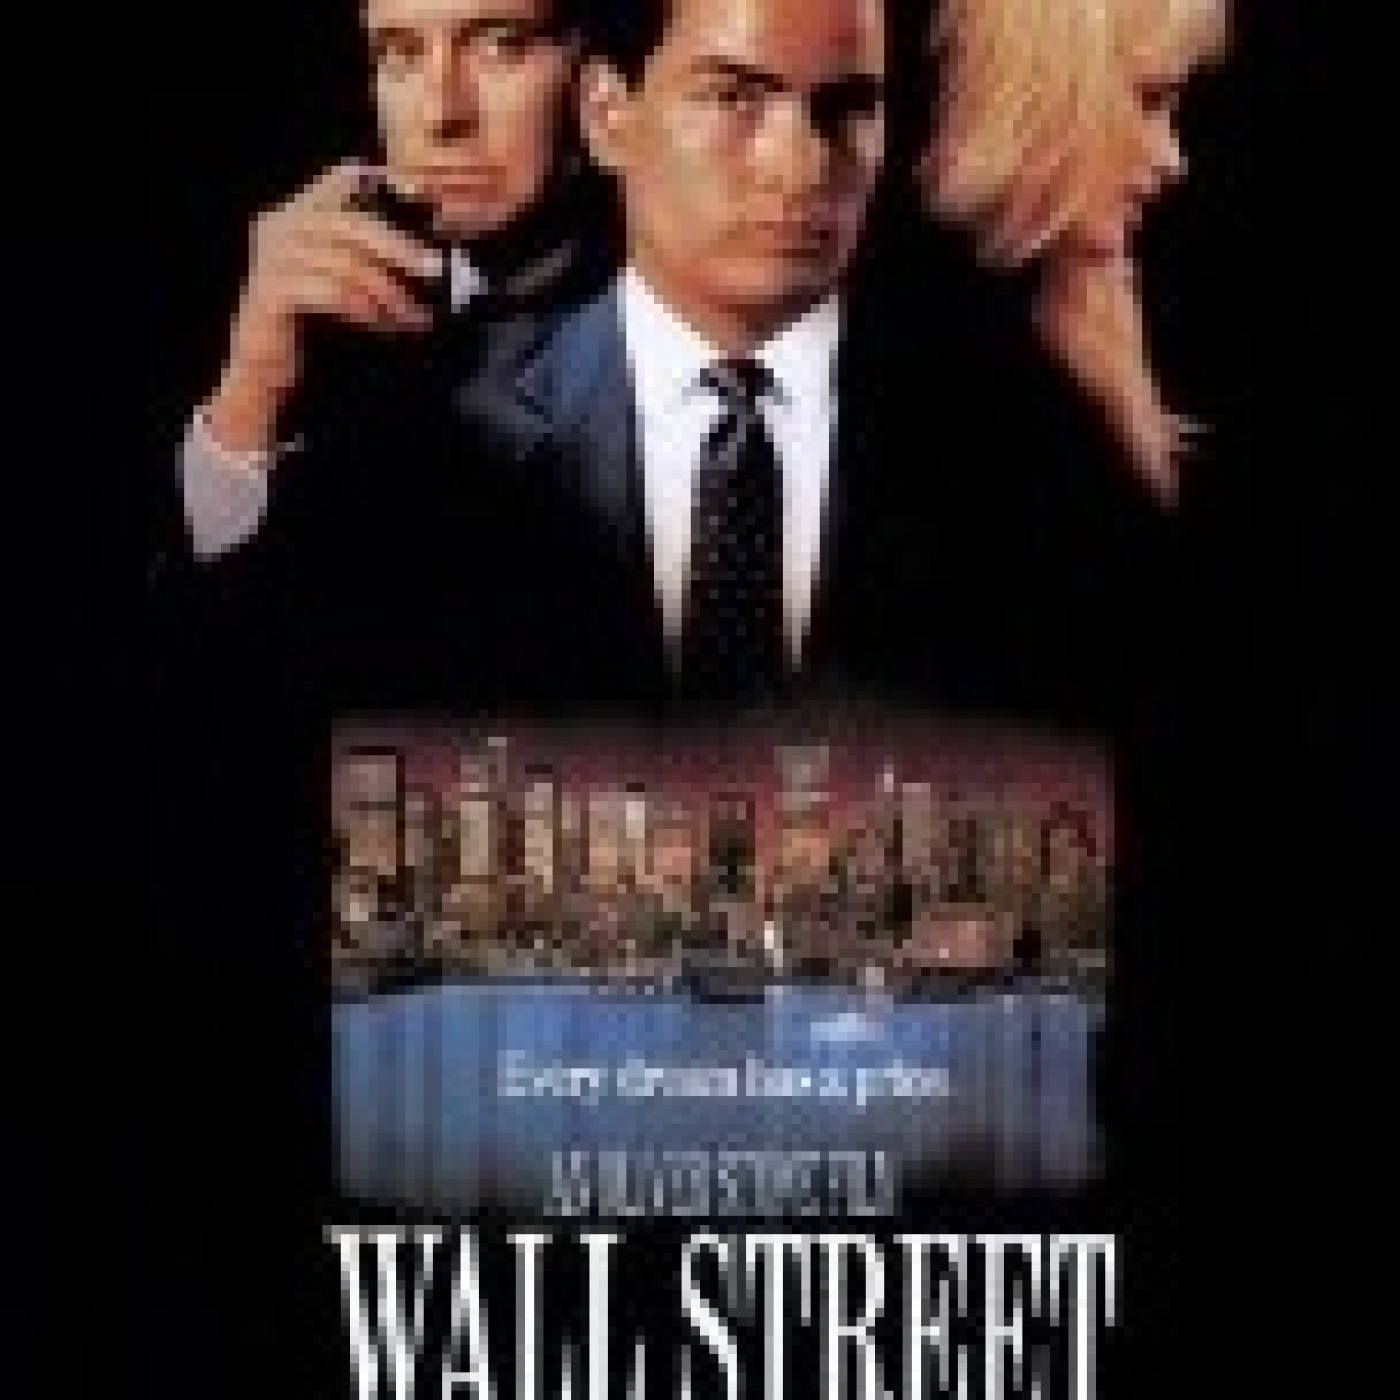 Peticiones Oyentes - Wall Street - 1987